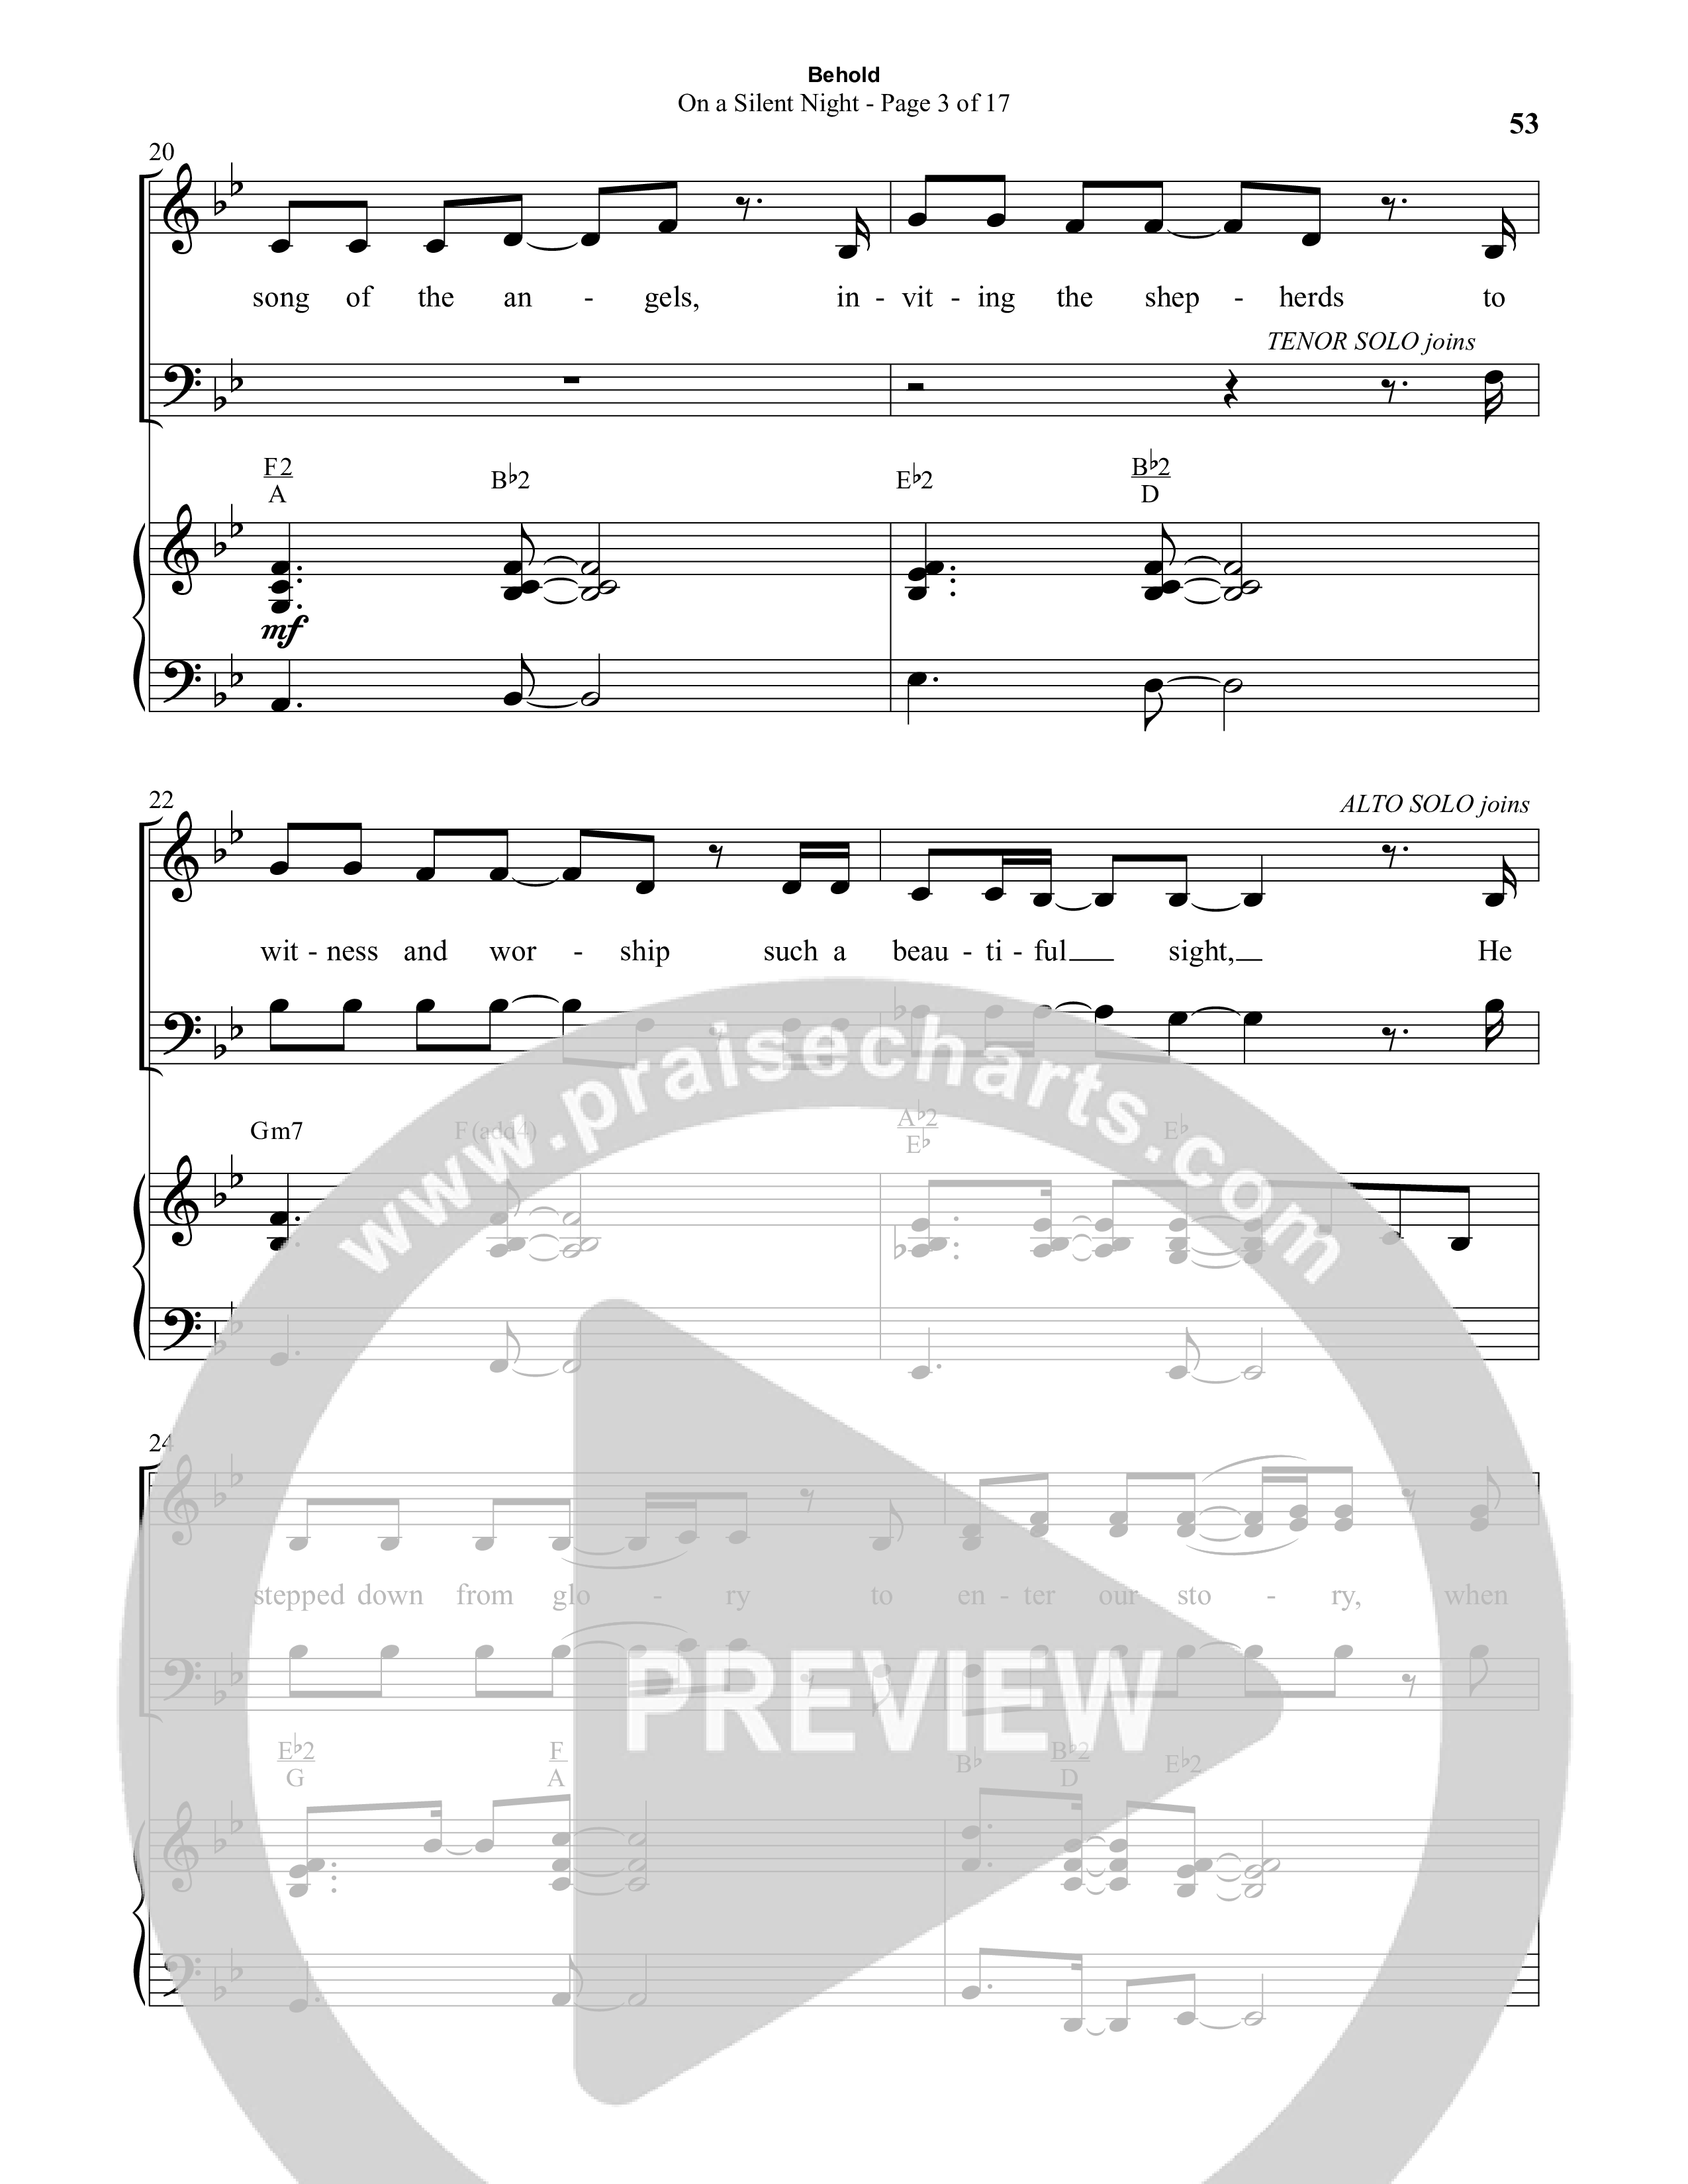 Behold (9 Song Choral Collection) Song 4 (Piano SATB) (Semsen Music / Arr. John Bolin / Orch. Cliff Duren)